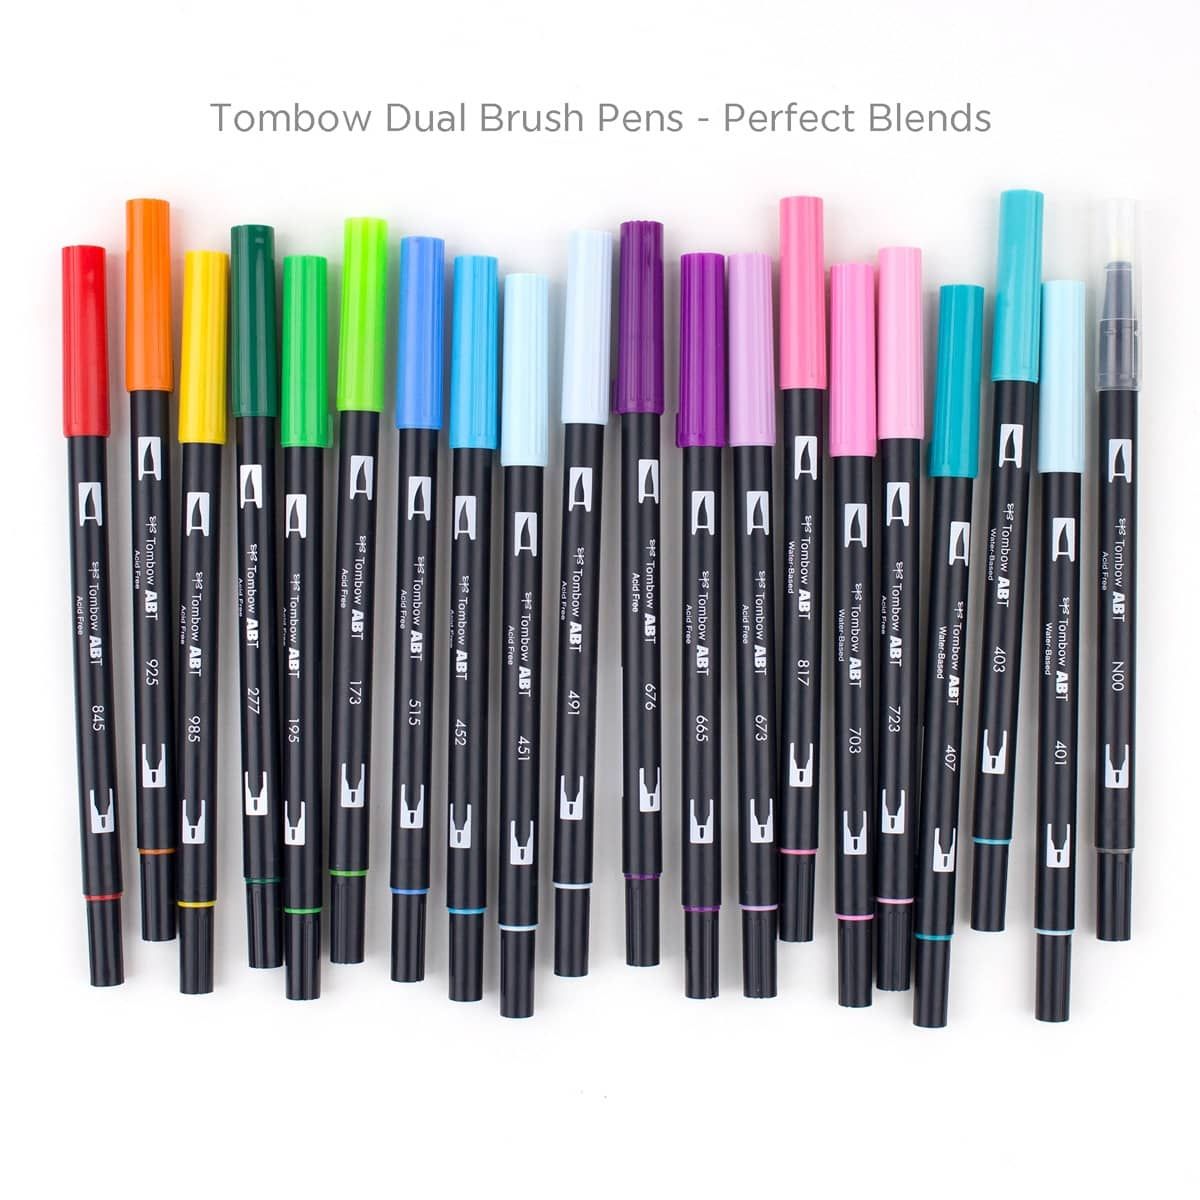 https://www.jerrysartarama.com/media/catalog/product/cache/ecb49a32eeb5603594b082bd5fe65733/t/o/tombow-dual-brush-pen-set-perfect-blends.jpg